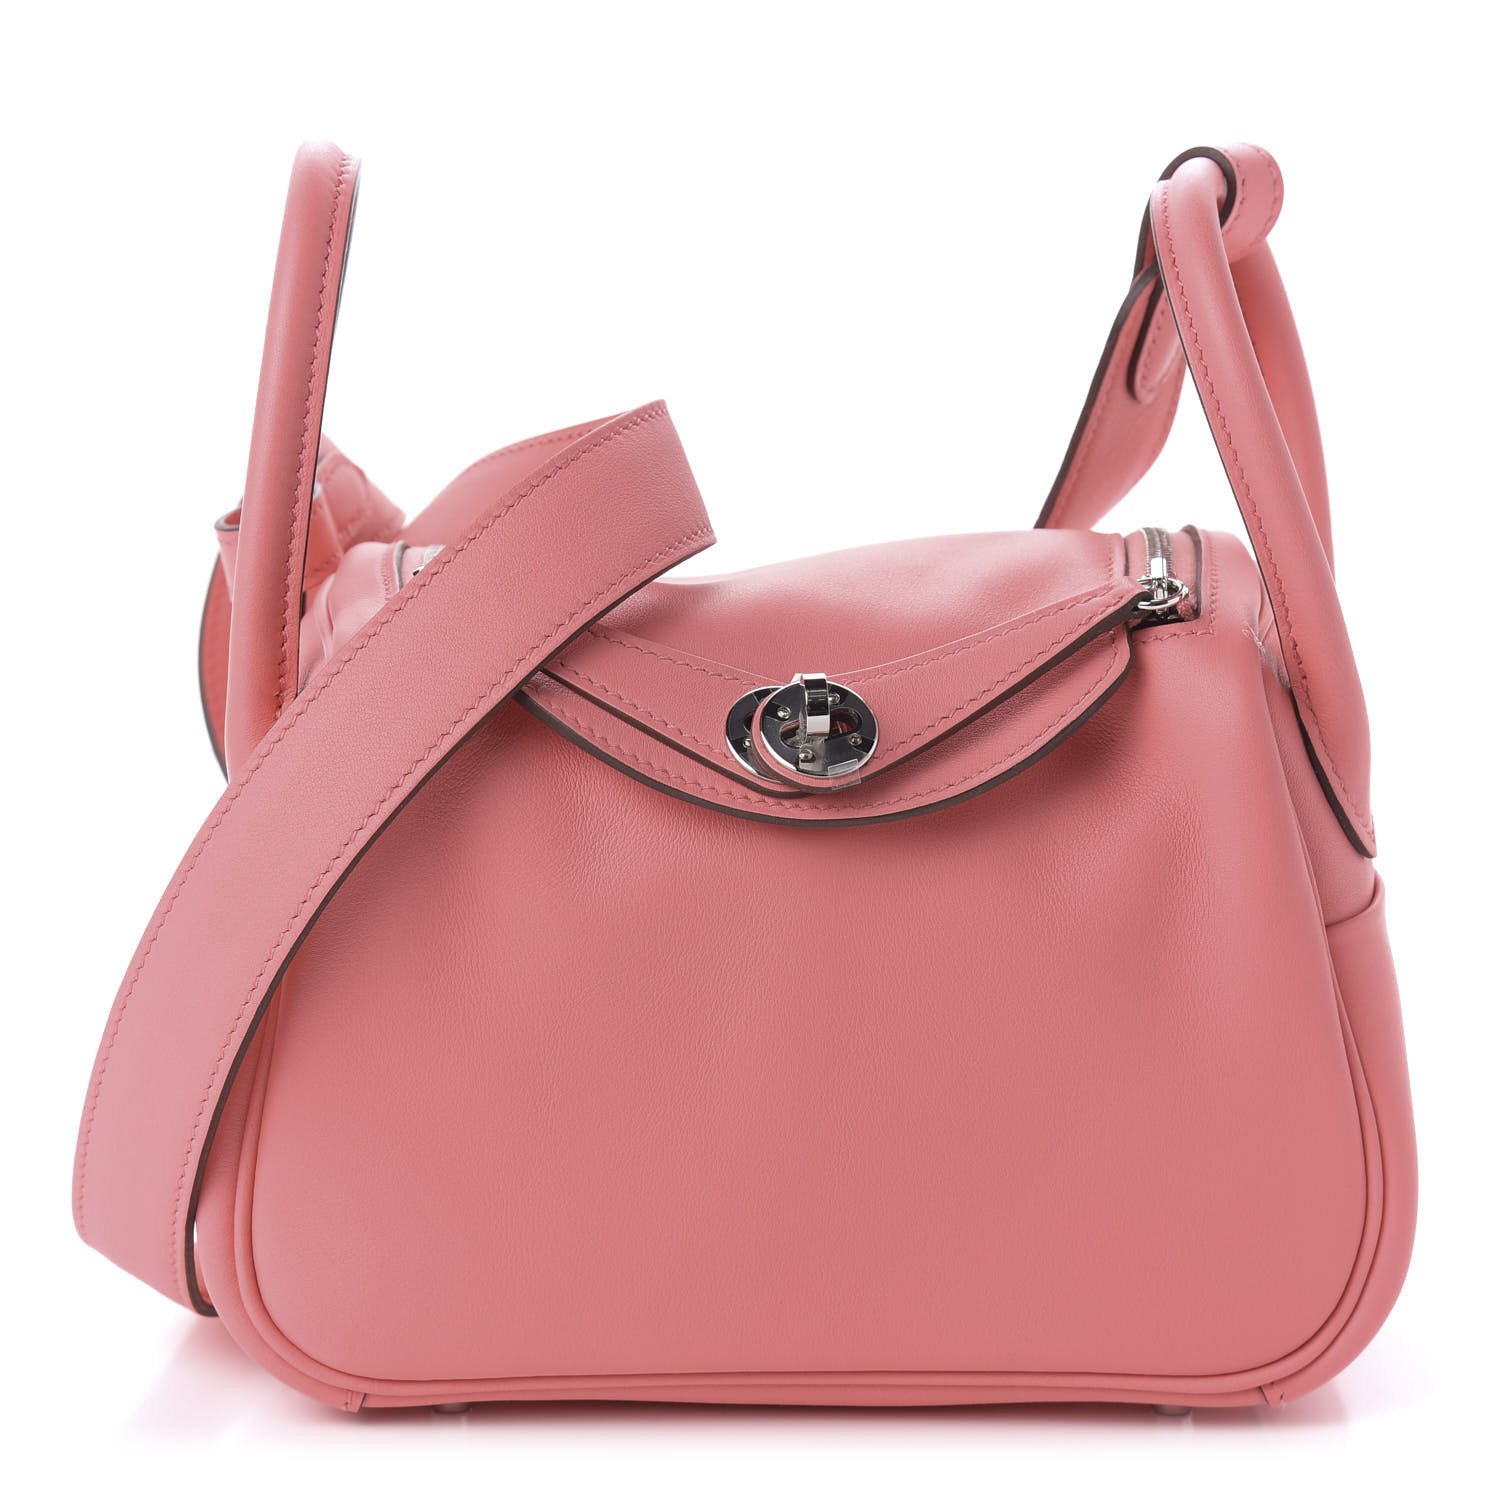 Pre-Owned Louis Vuitton bag @thestorewatches #thestorewatches  #thestoreluxurygoods #luxurybags #louisvuitton #dubai #chanel #hermes…